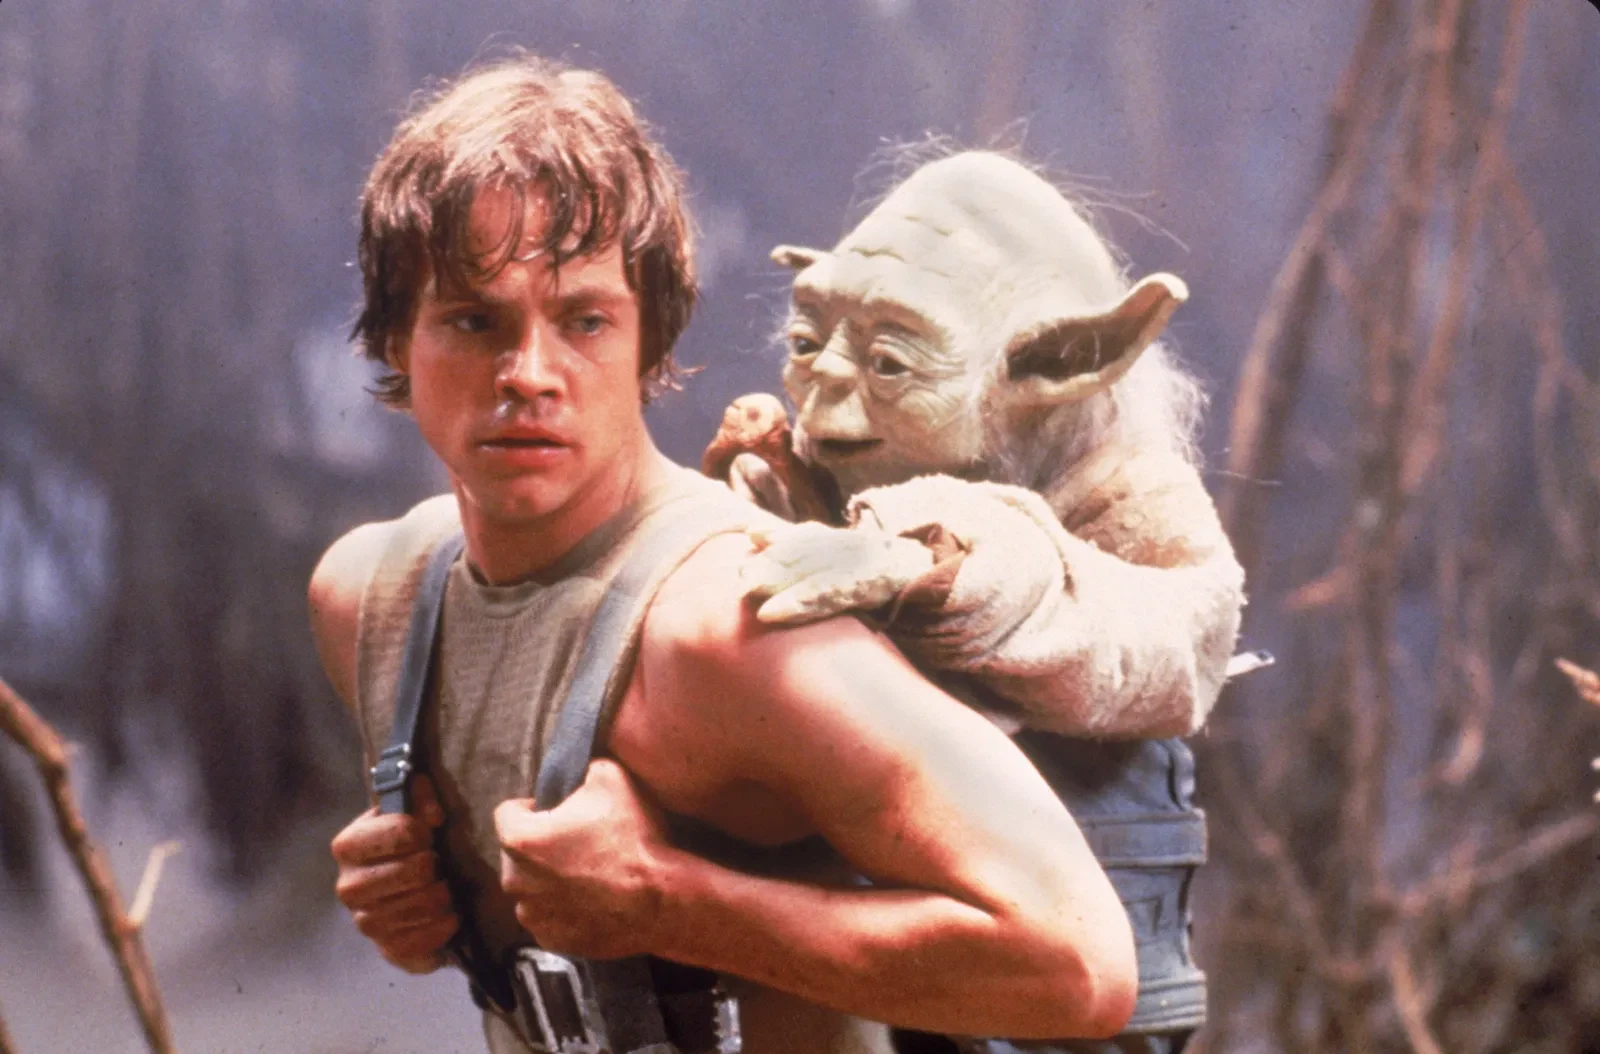 Luke Skywalker with Yoda in Star Wars: The Empire Strikes Back